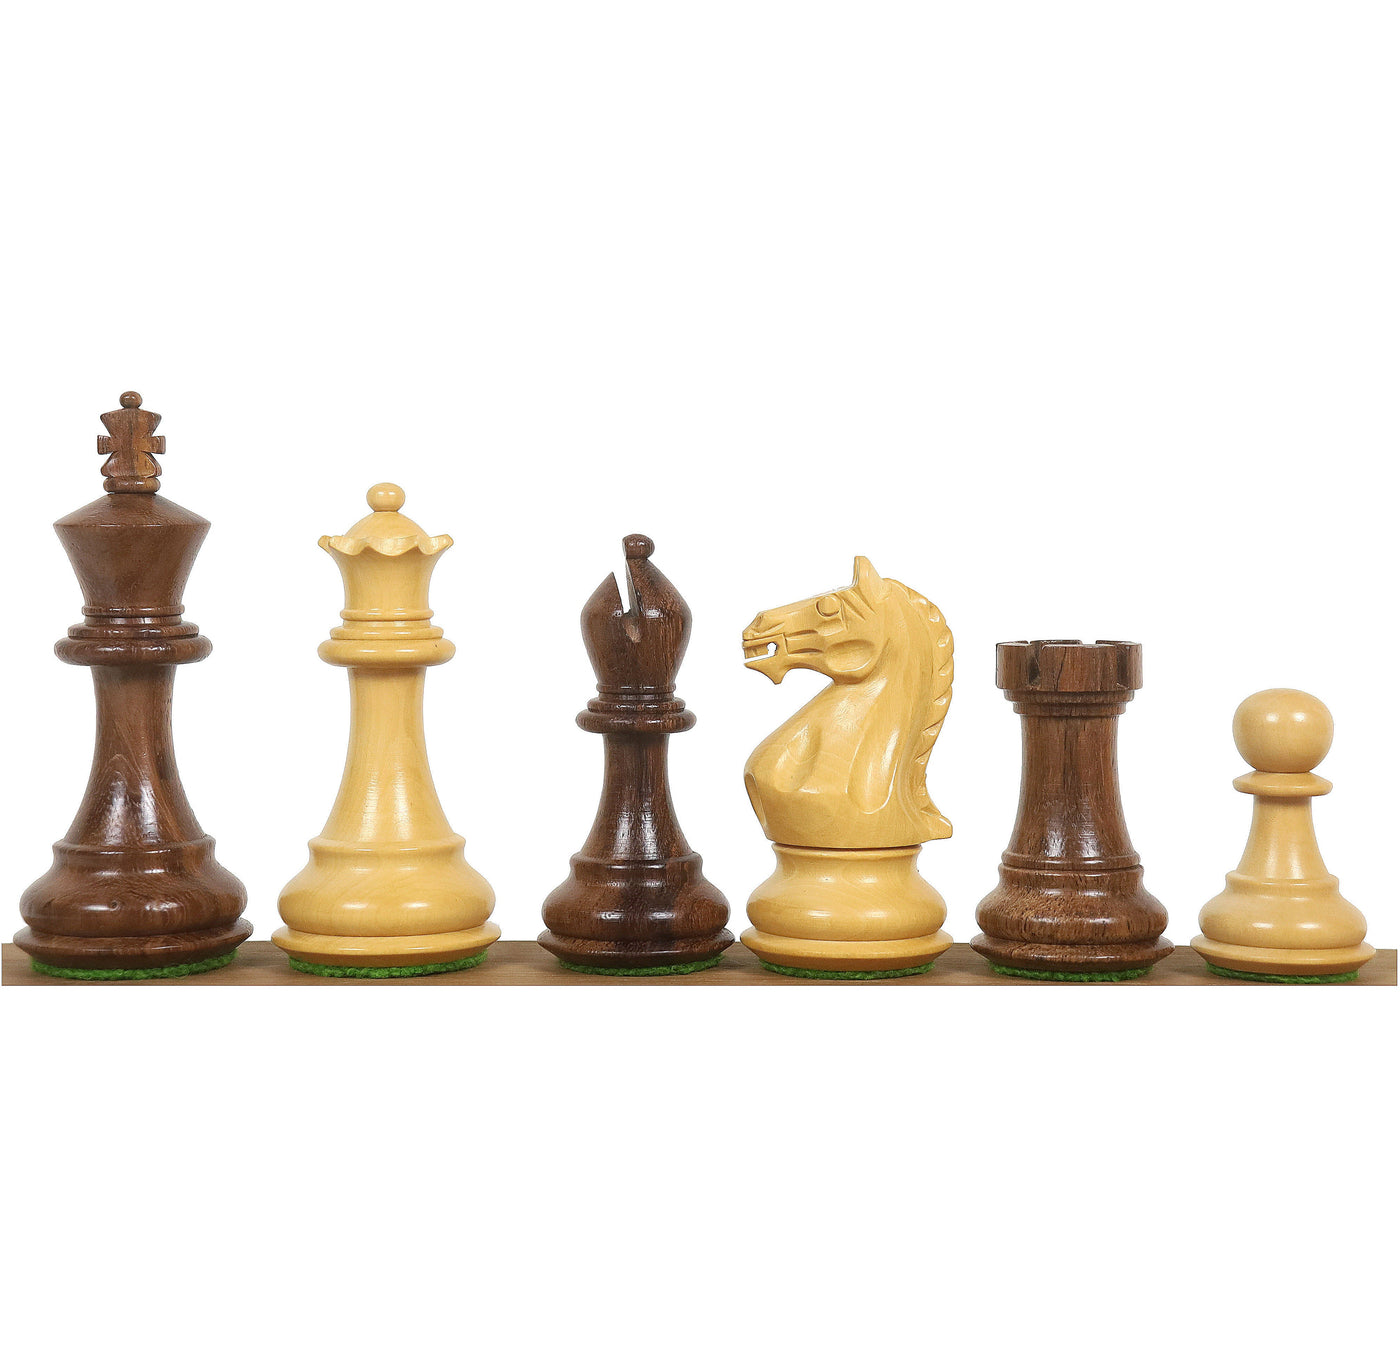 3.75" Queens Gambit Staunton Chess Pieces with 21" Drueke Style Matt Finish Chess board and Storage Box - Golden Rosewood & Maple Wood